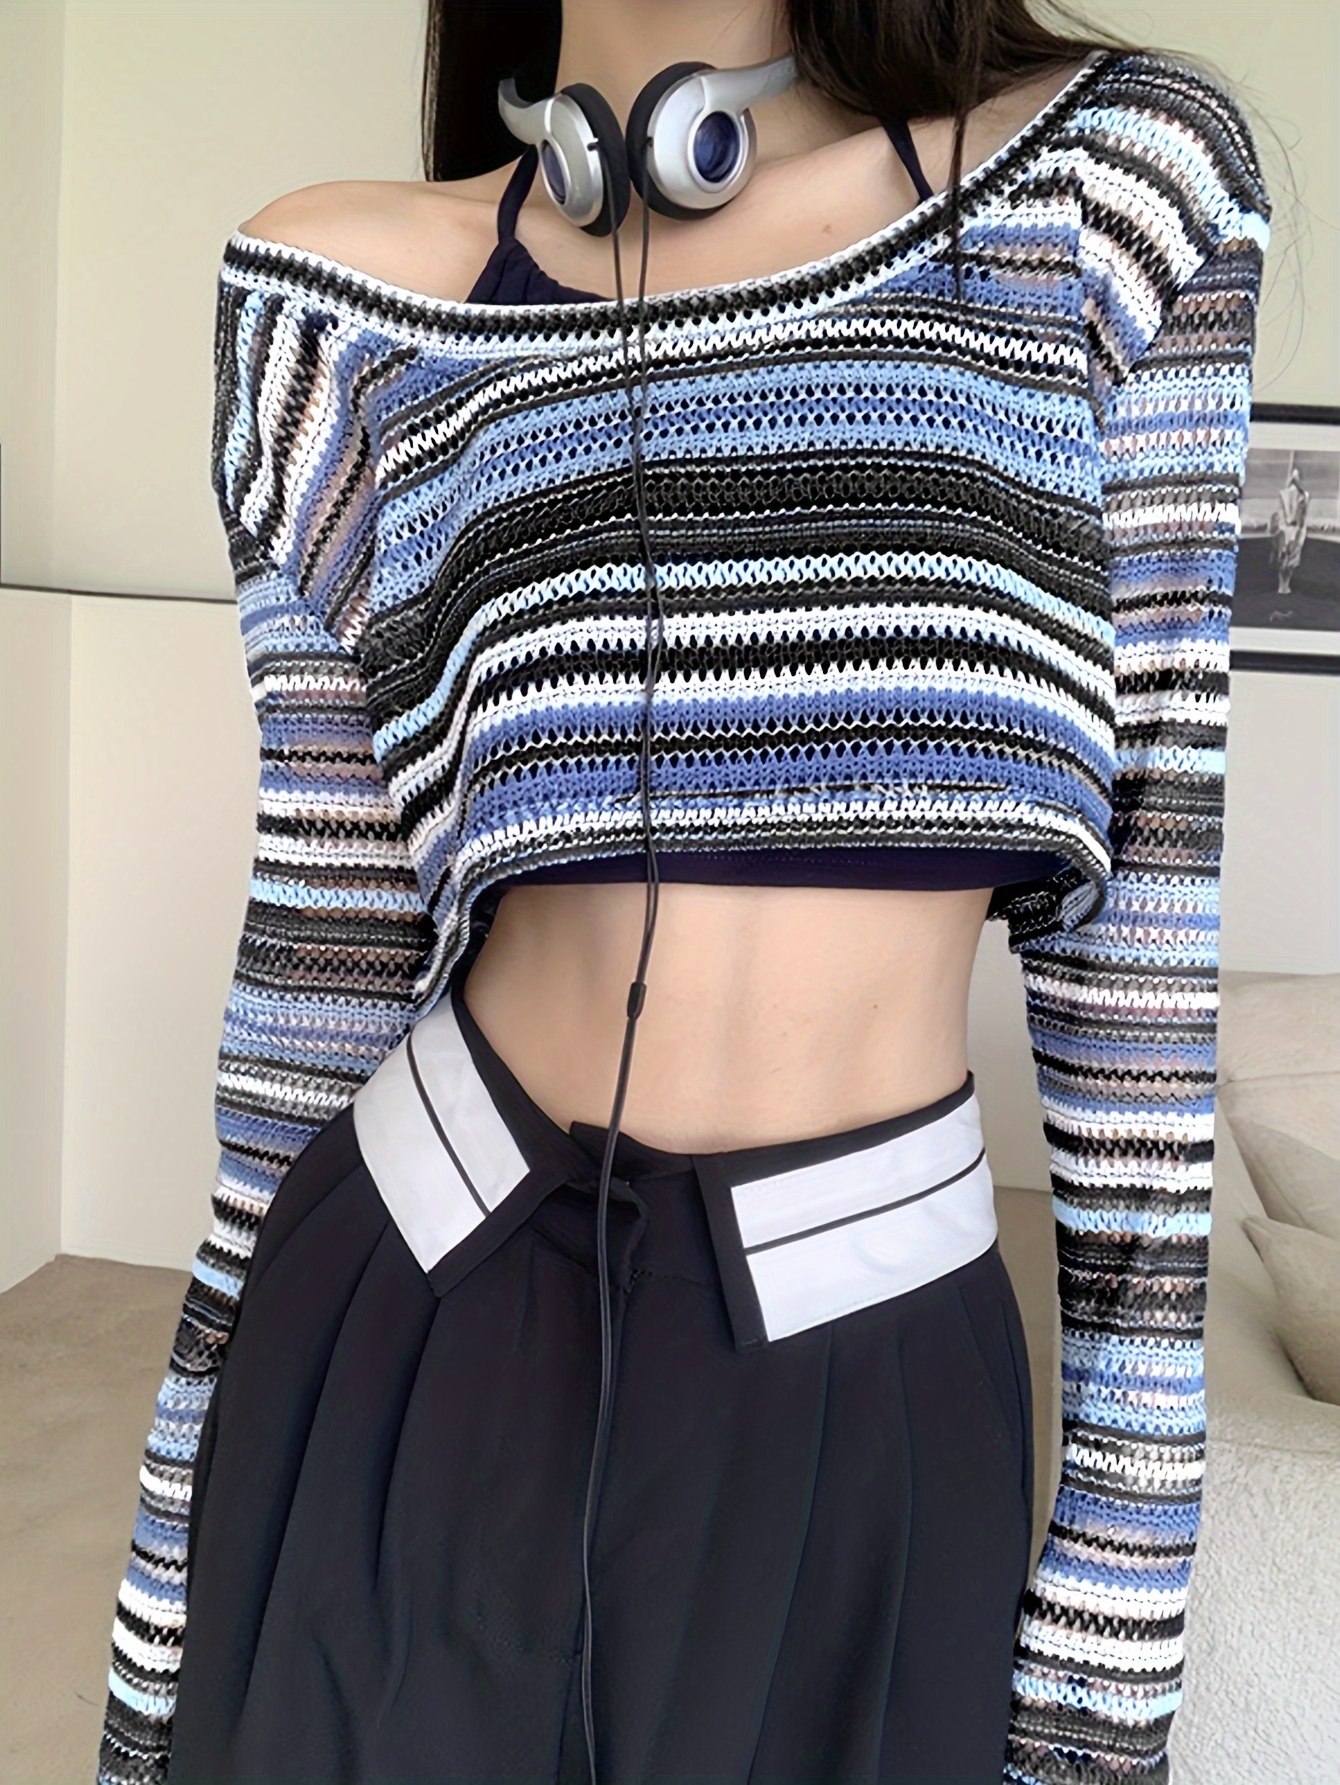 Zara rib knit top worn with shrug  Ribbed knit top, Knit top, Rib